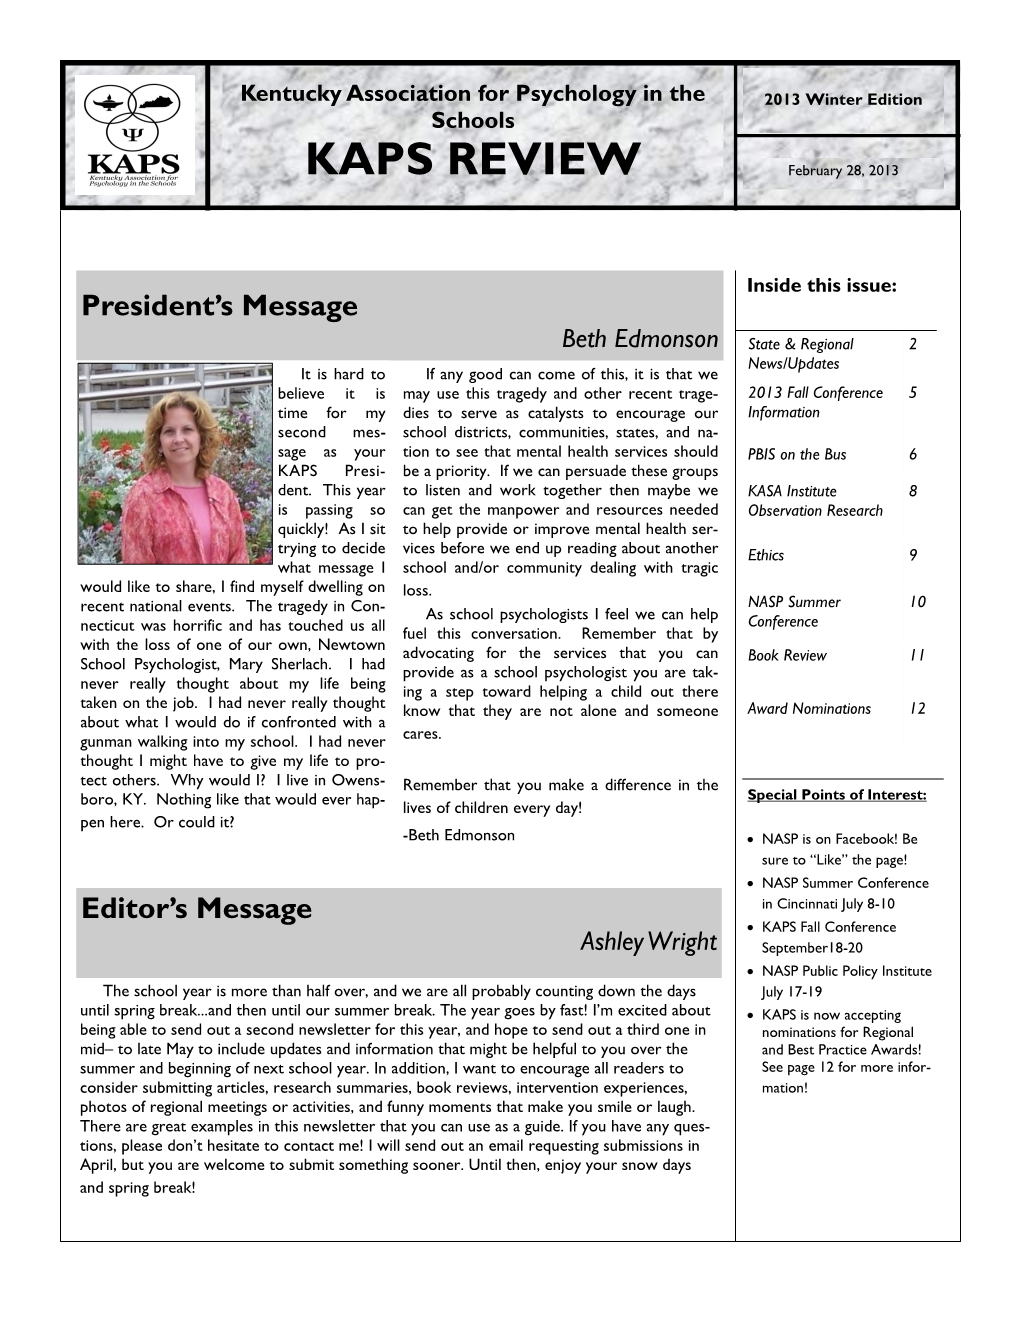 KAPS REVIEW February 28, 2013